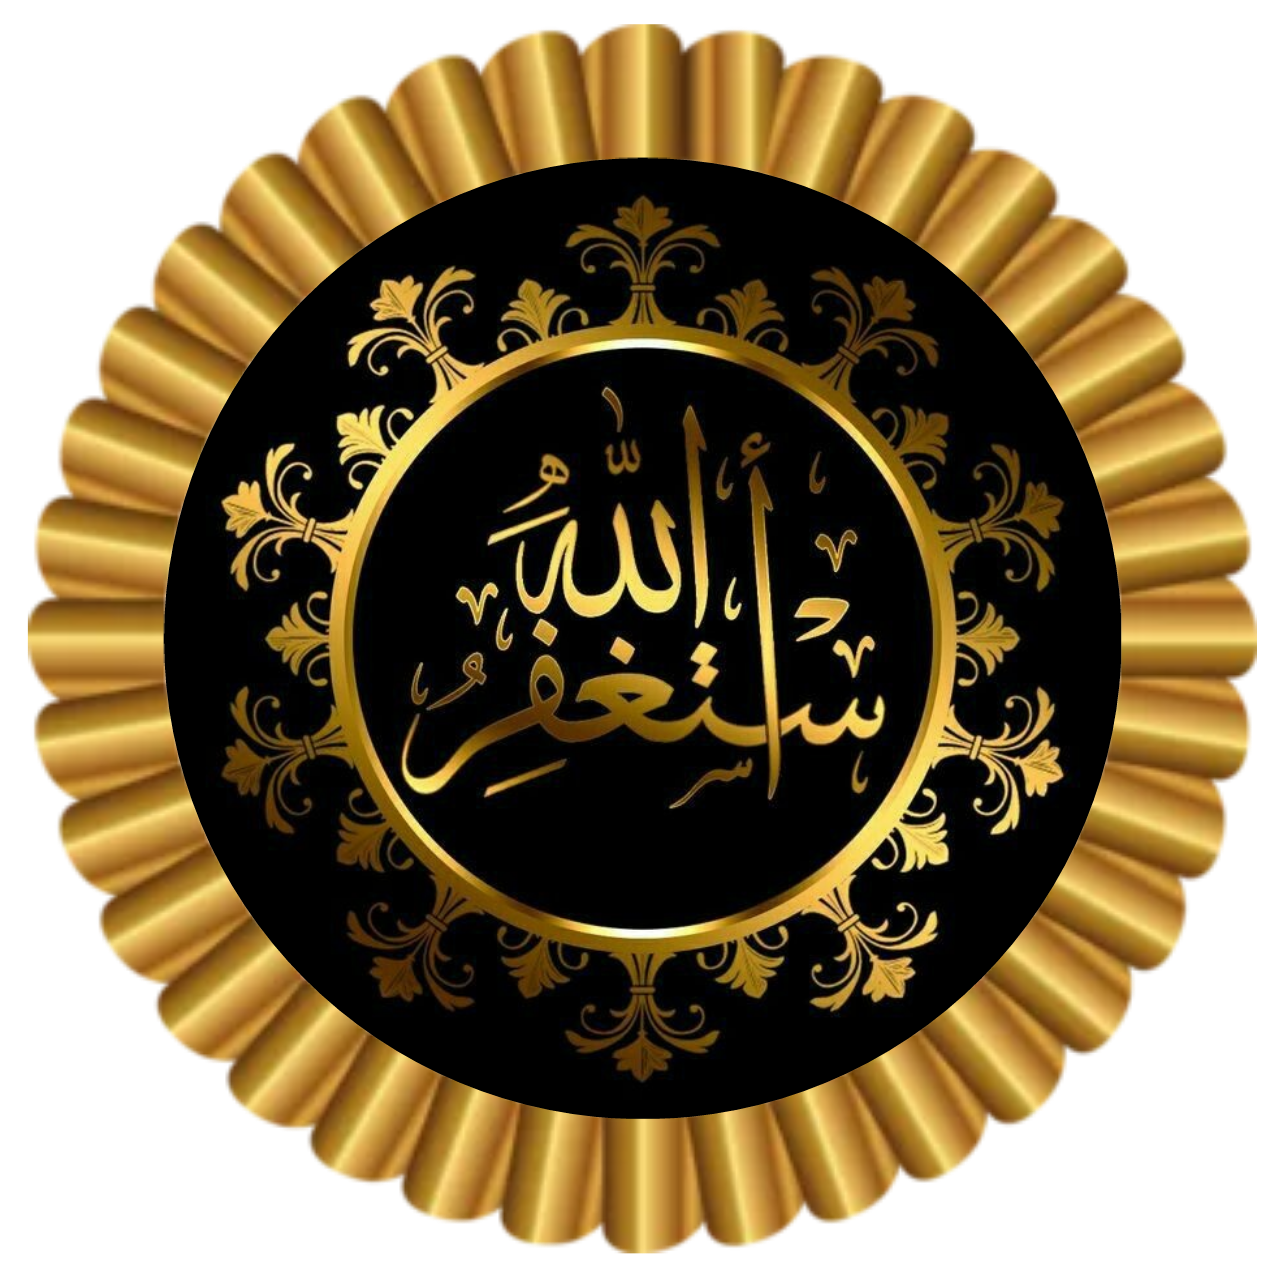 Freetoedit Eemput Islam Muslim Allah Sticker By Putwell Art